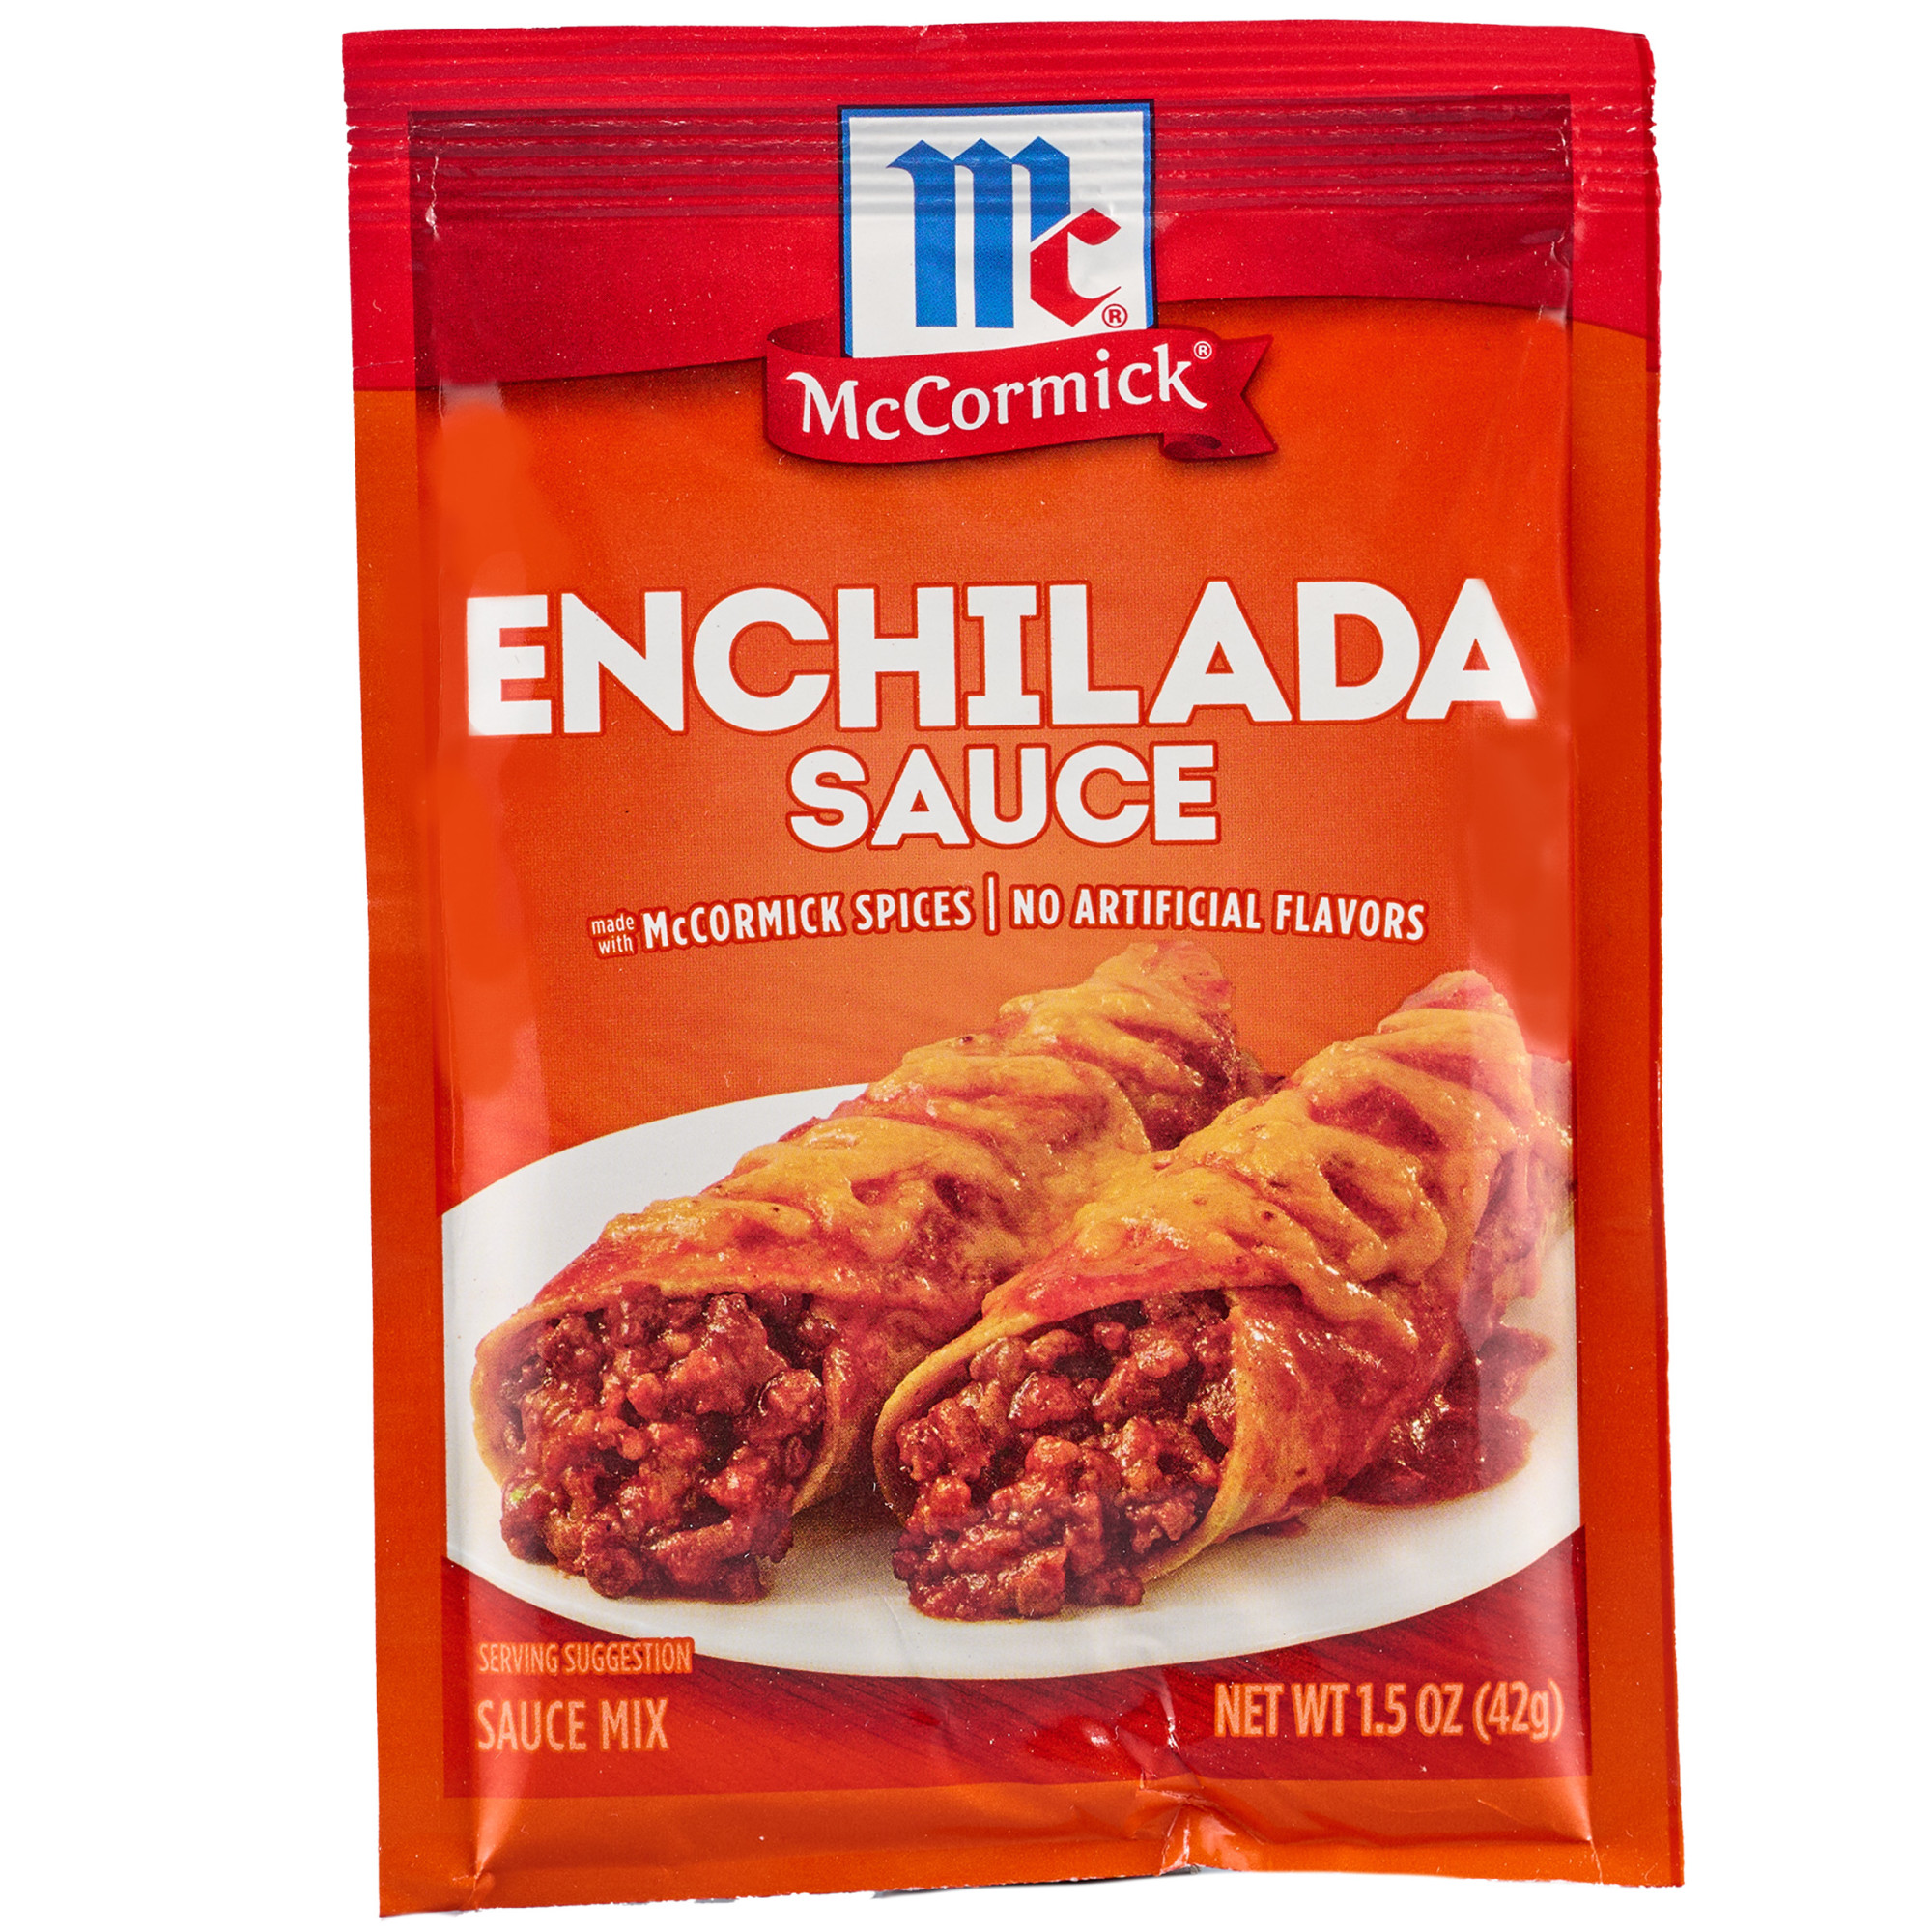 McCormick Enchilada Sauce Mix, 1.5 oz Envelope - image 1 of 12